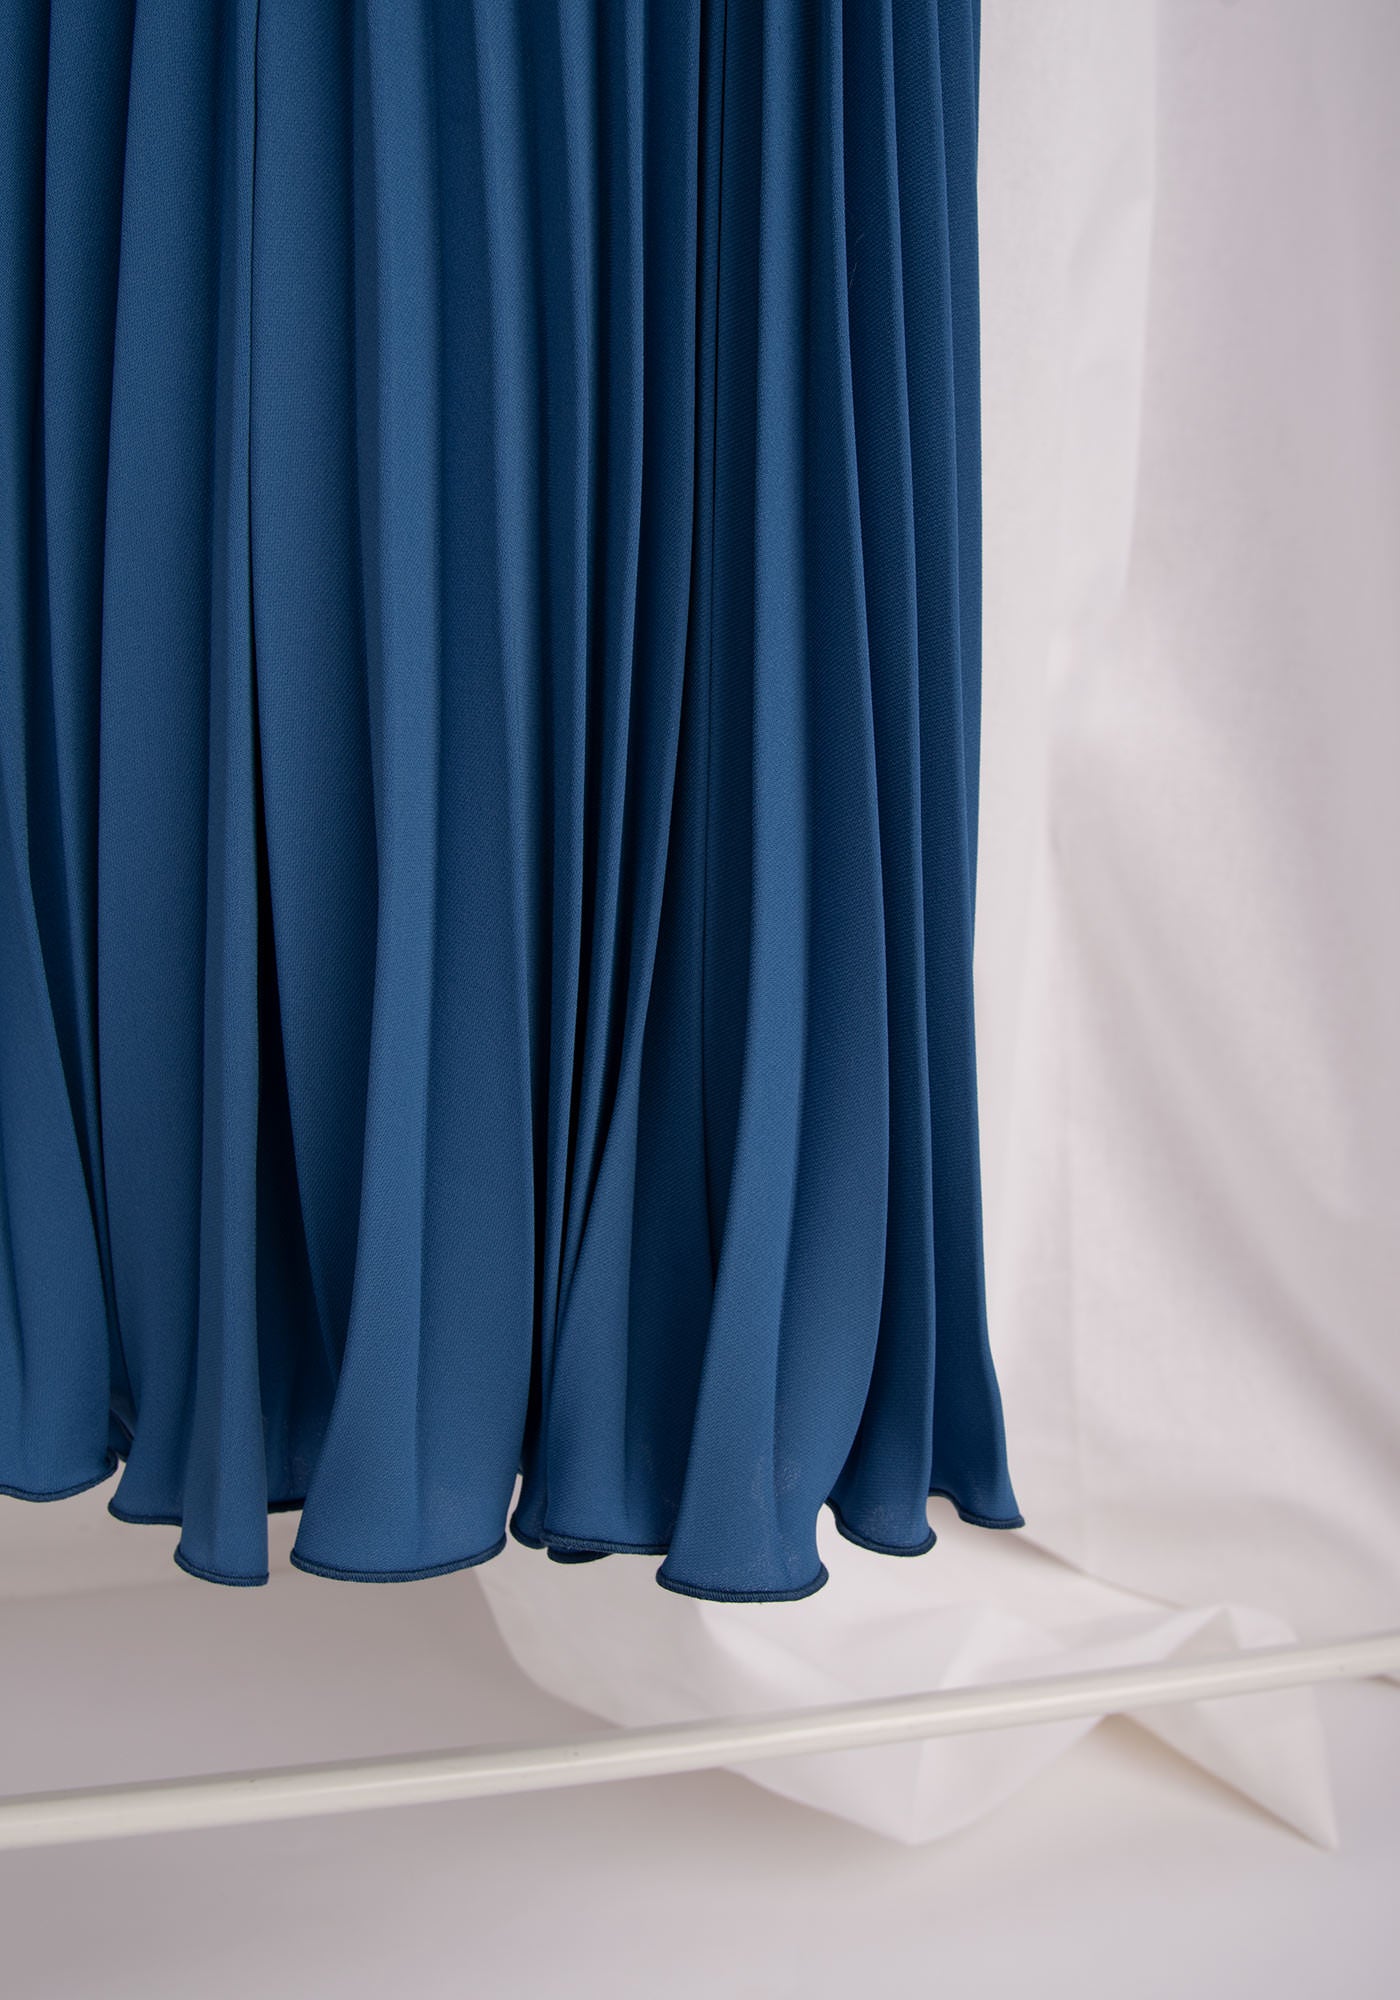 Midi Dress with Soleil pleats in Blue